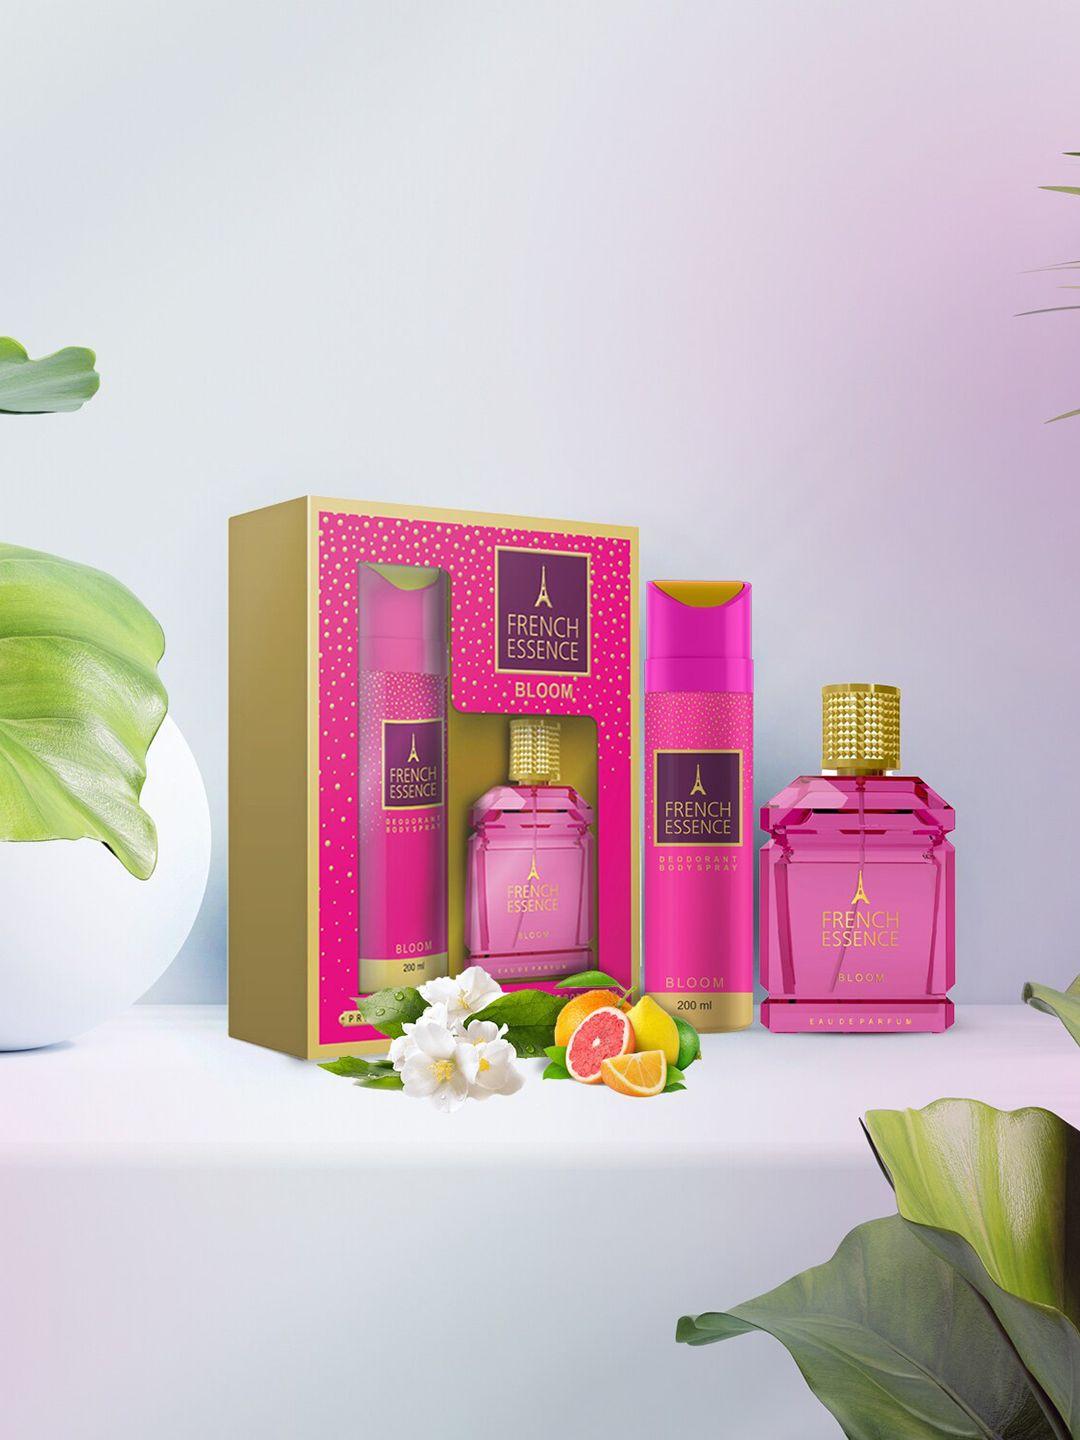 french essence women bloom perfume & deodorant gift set - 60 ml + 200 ml